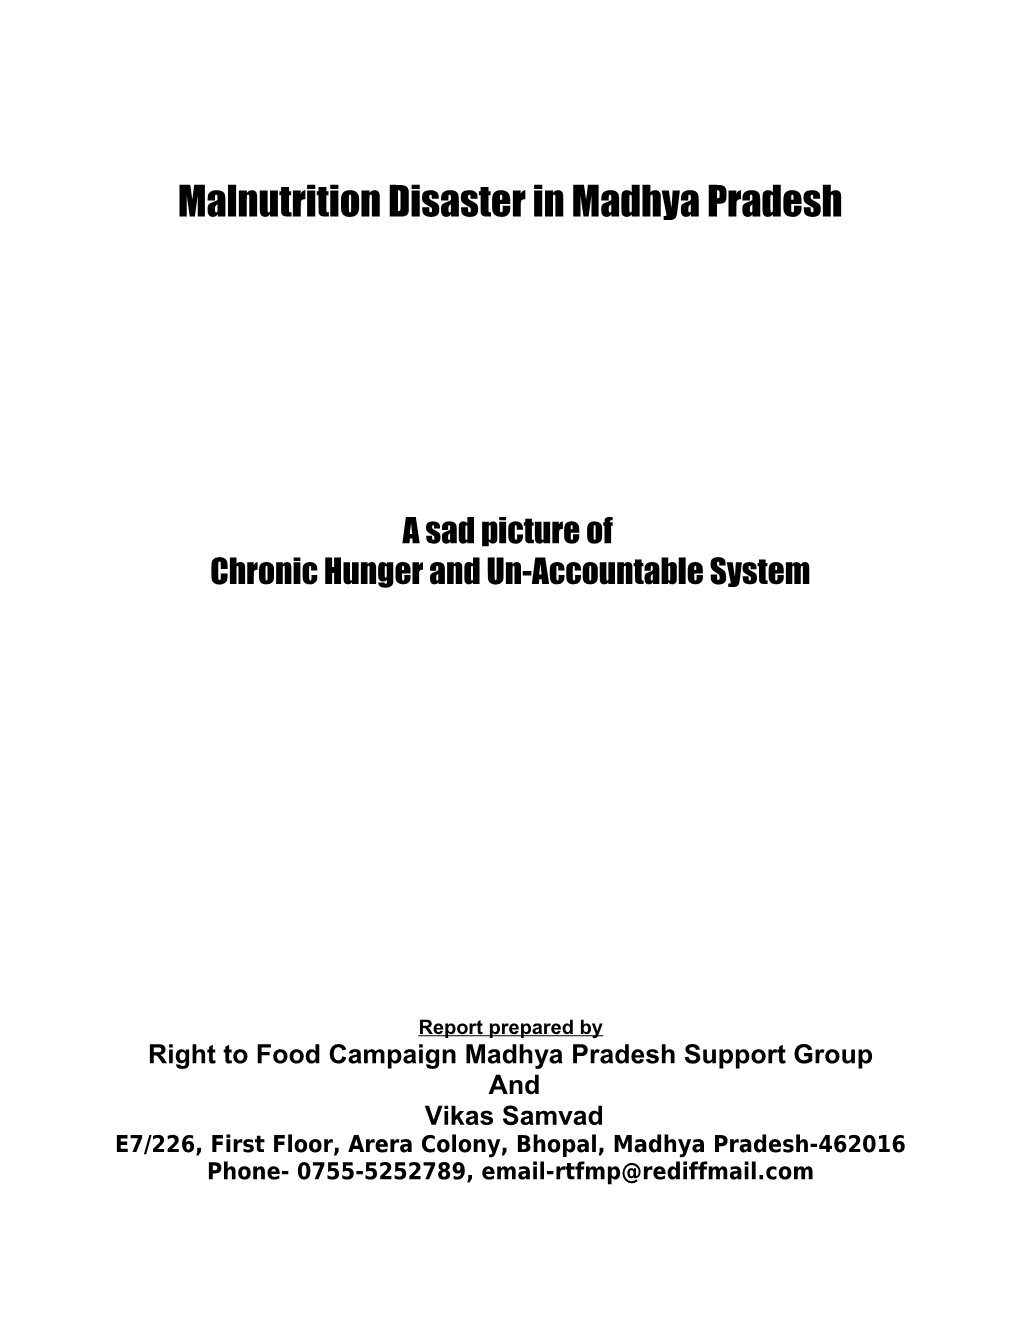 Malnutrition Disaster in Madhya Pradesh